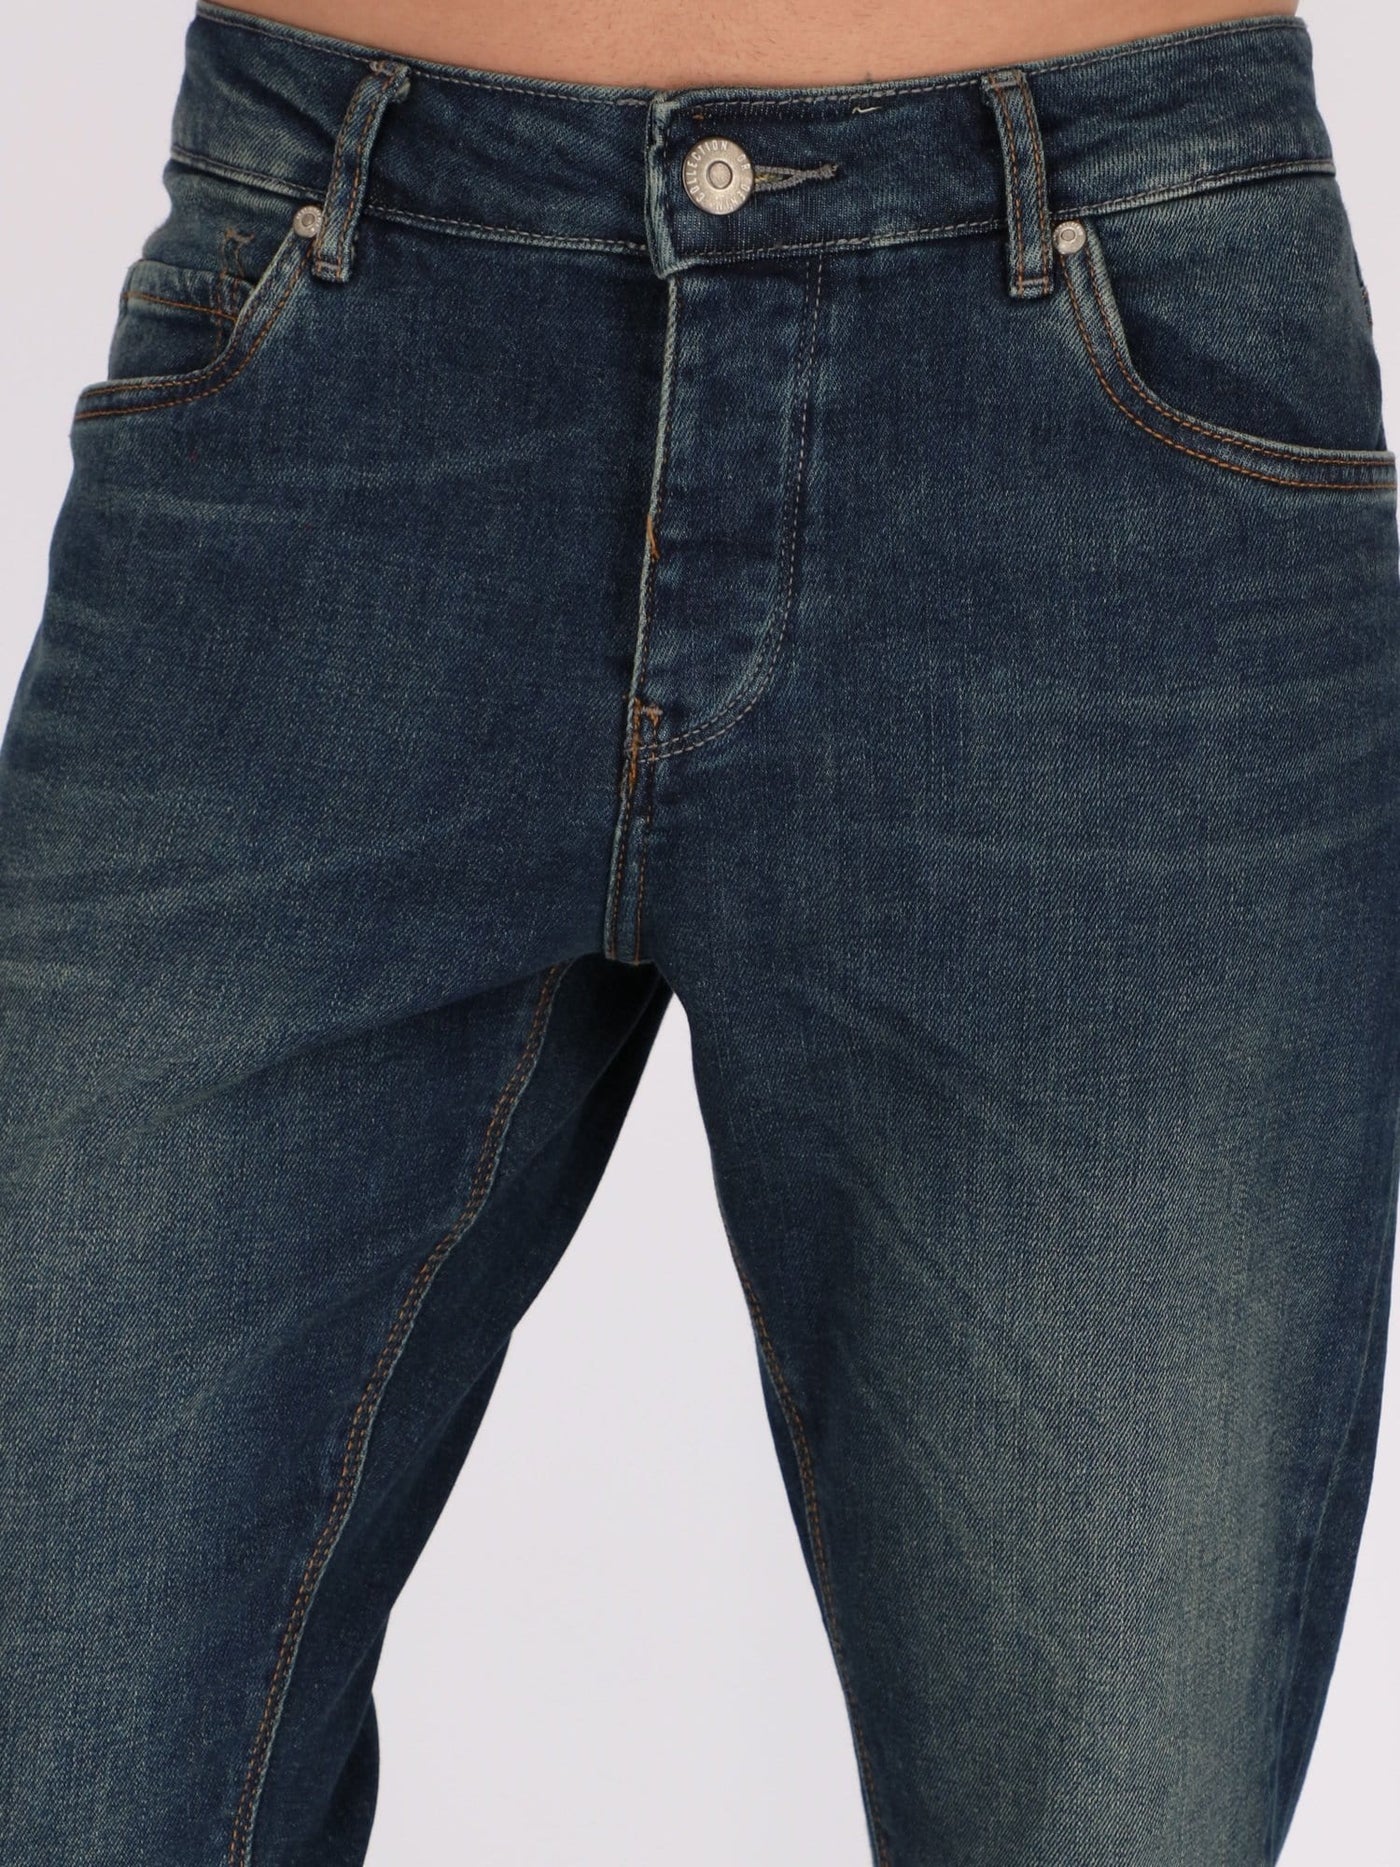 OR Pants & Shorts Dark Jeans / 32 Regular Fit Denim Jeans